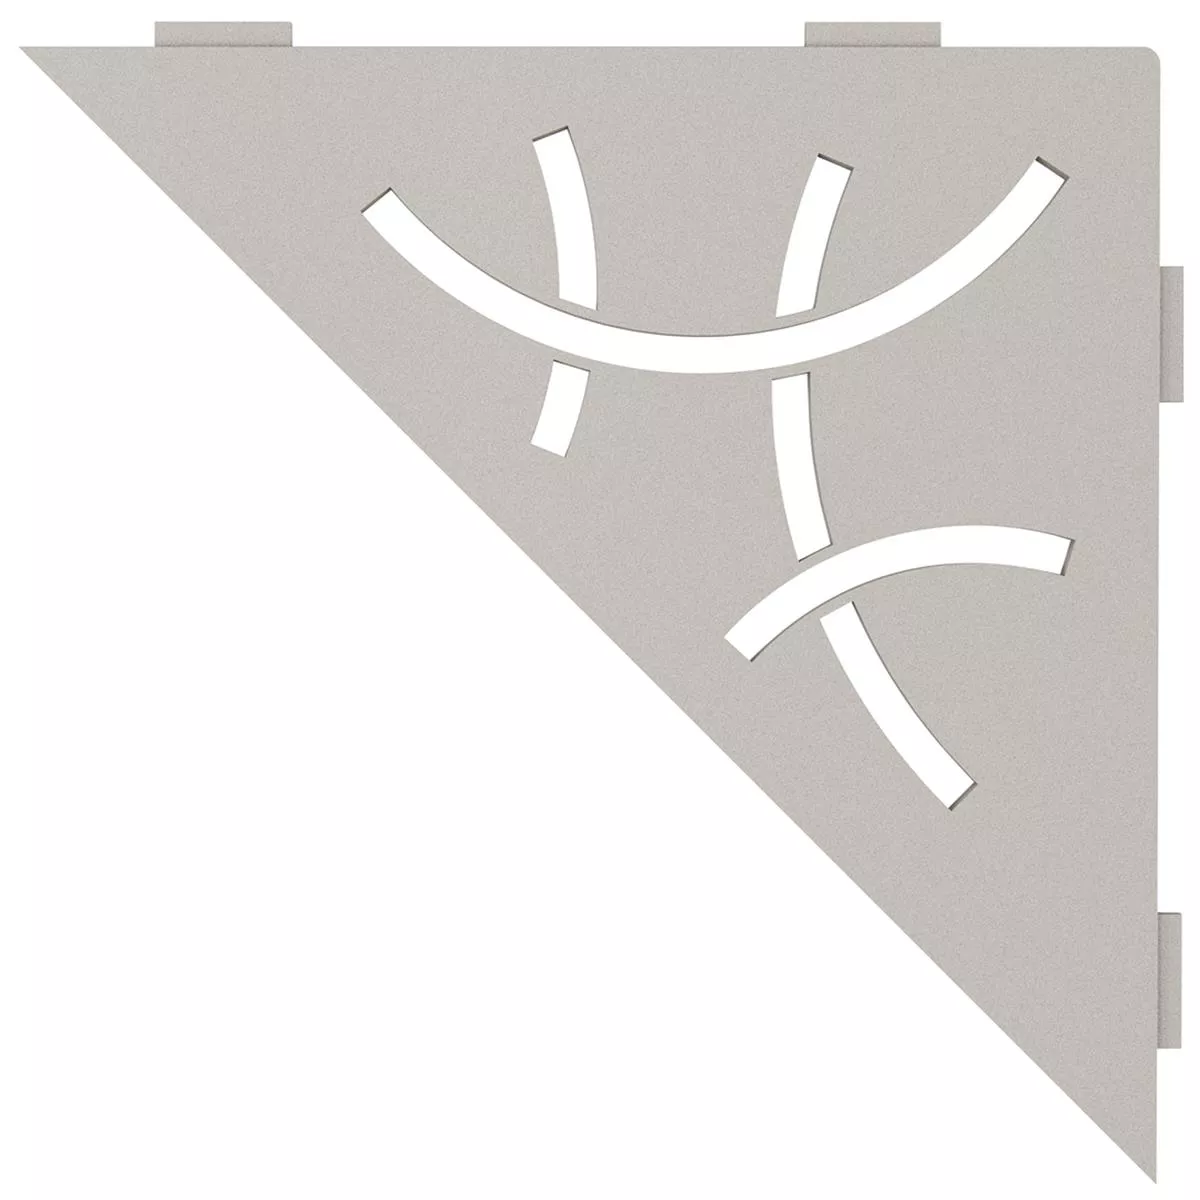 Schlüter vegghylle trekant 21x21cm kurve beige grå